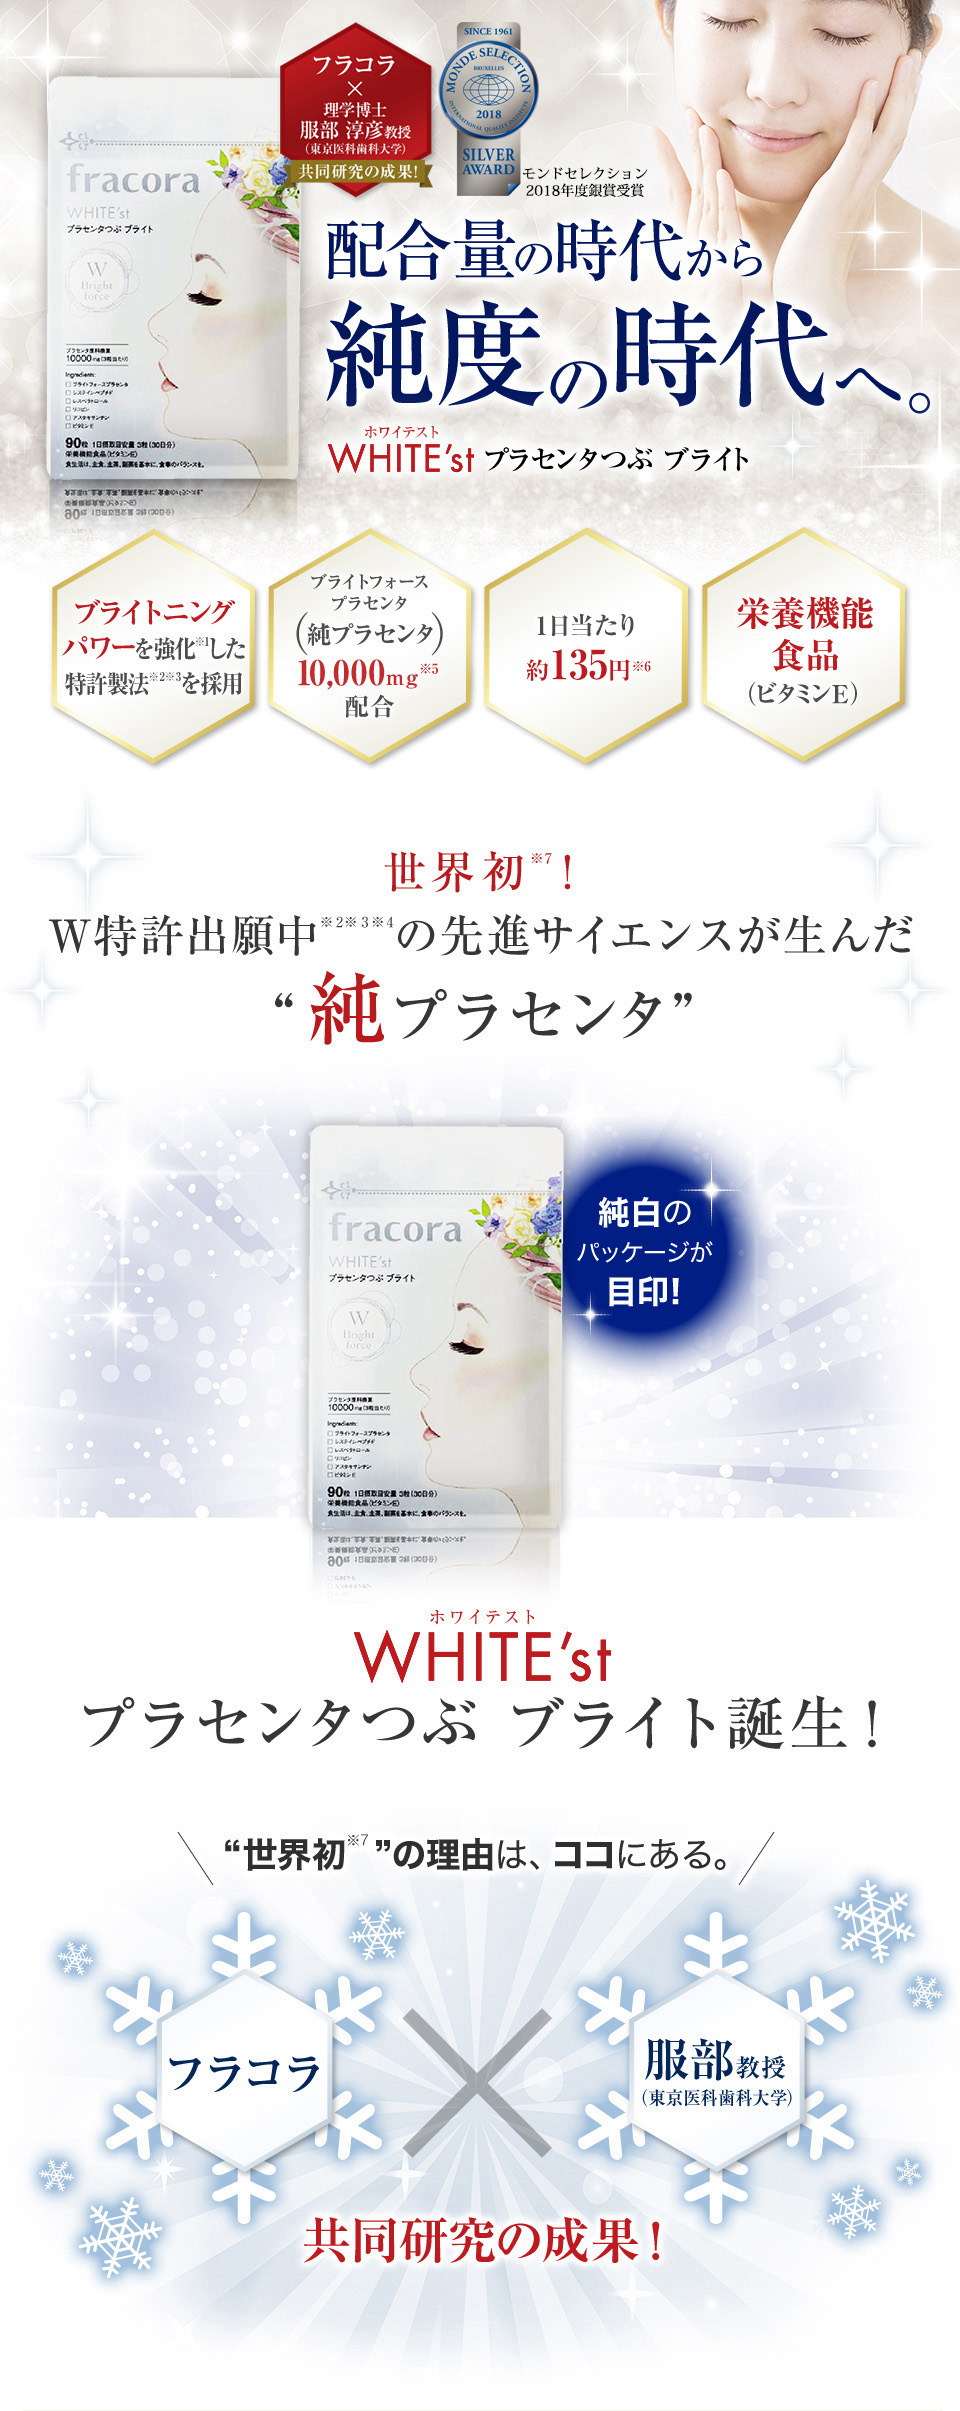 WHITE'st プラセンタつぶ ブライト  フラコラ(fracora)公式サイト